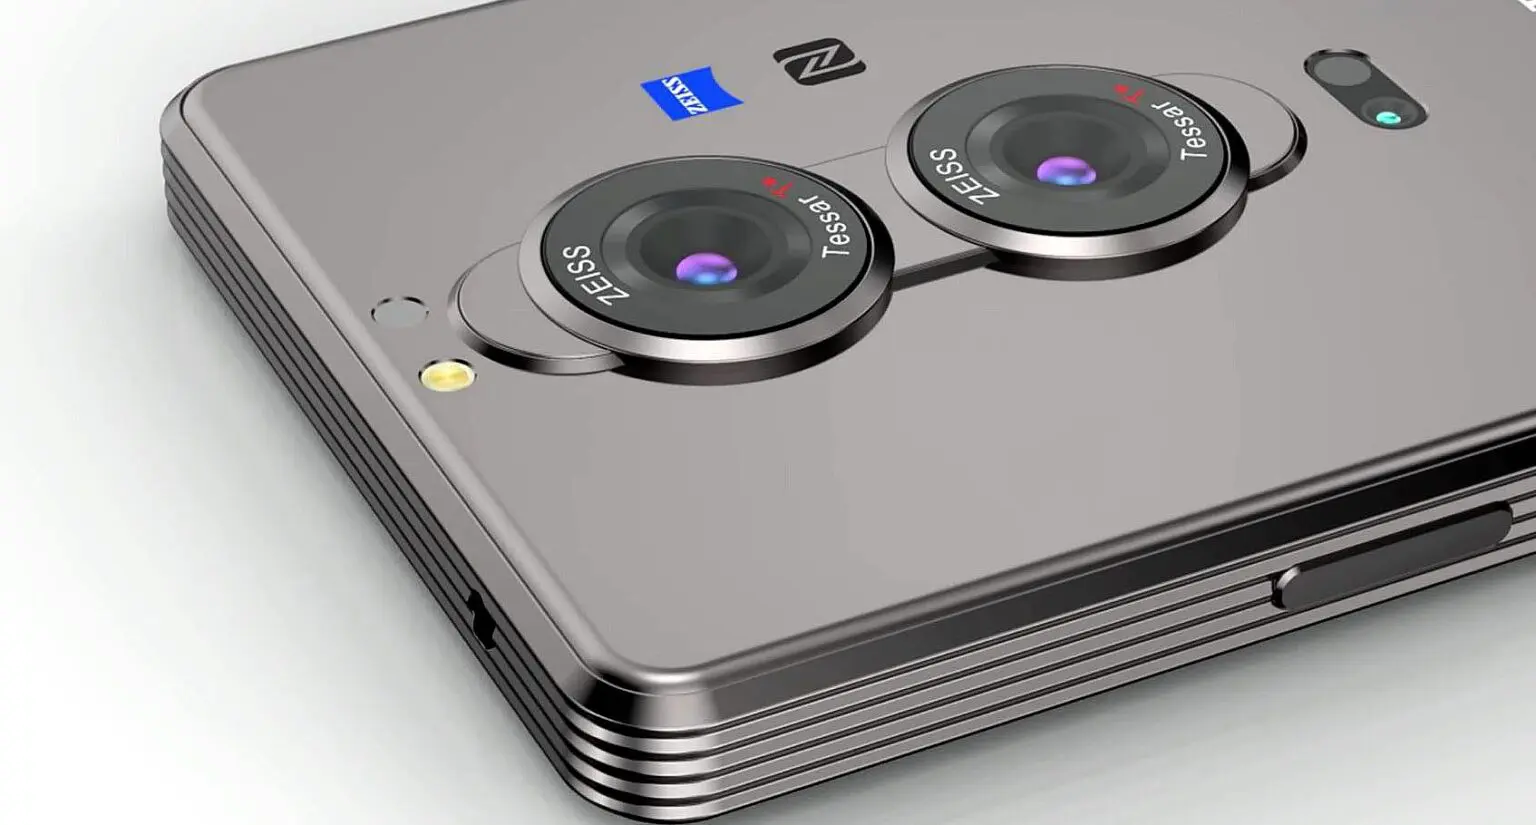 Upcoming Sony Xperia Pro's camera sensors detailed